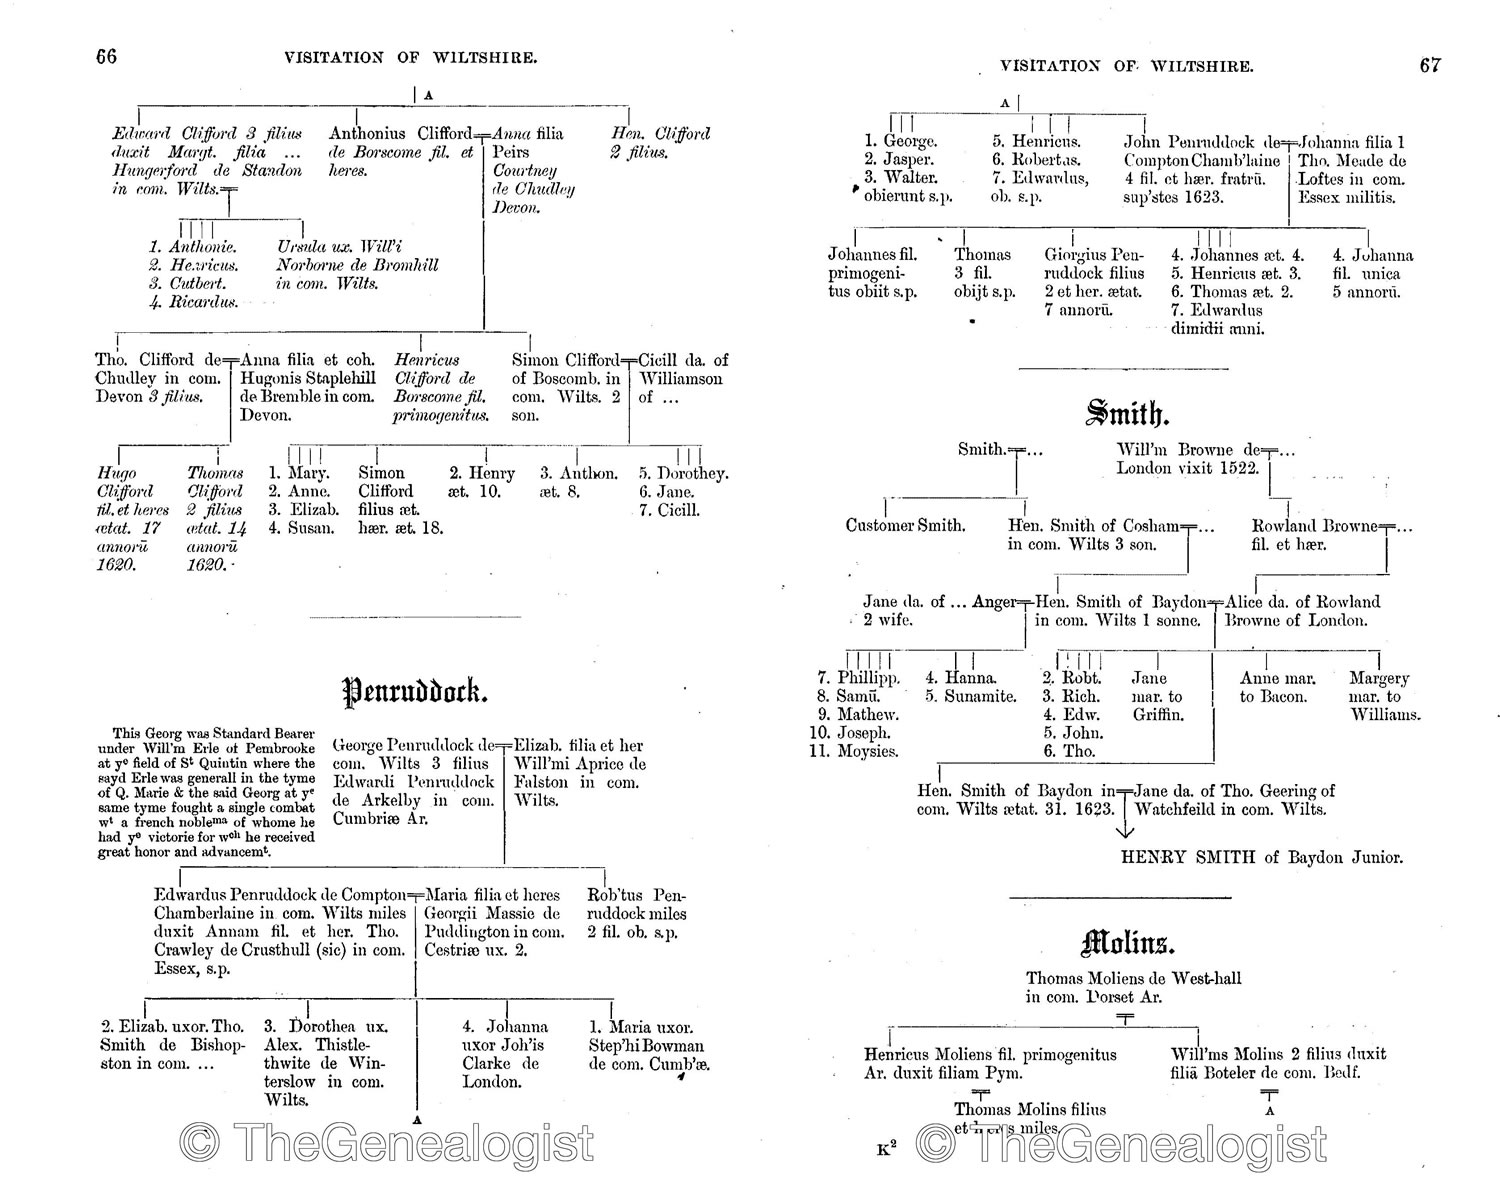 TheGenealogist's Peerage, Gentry & Royalty records – Penruddock in the Wiltshire Visitation 1623